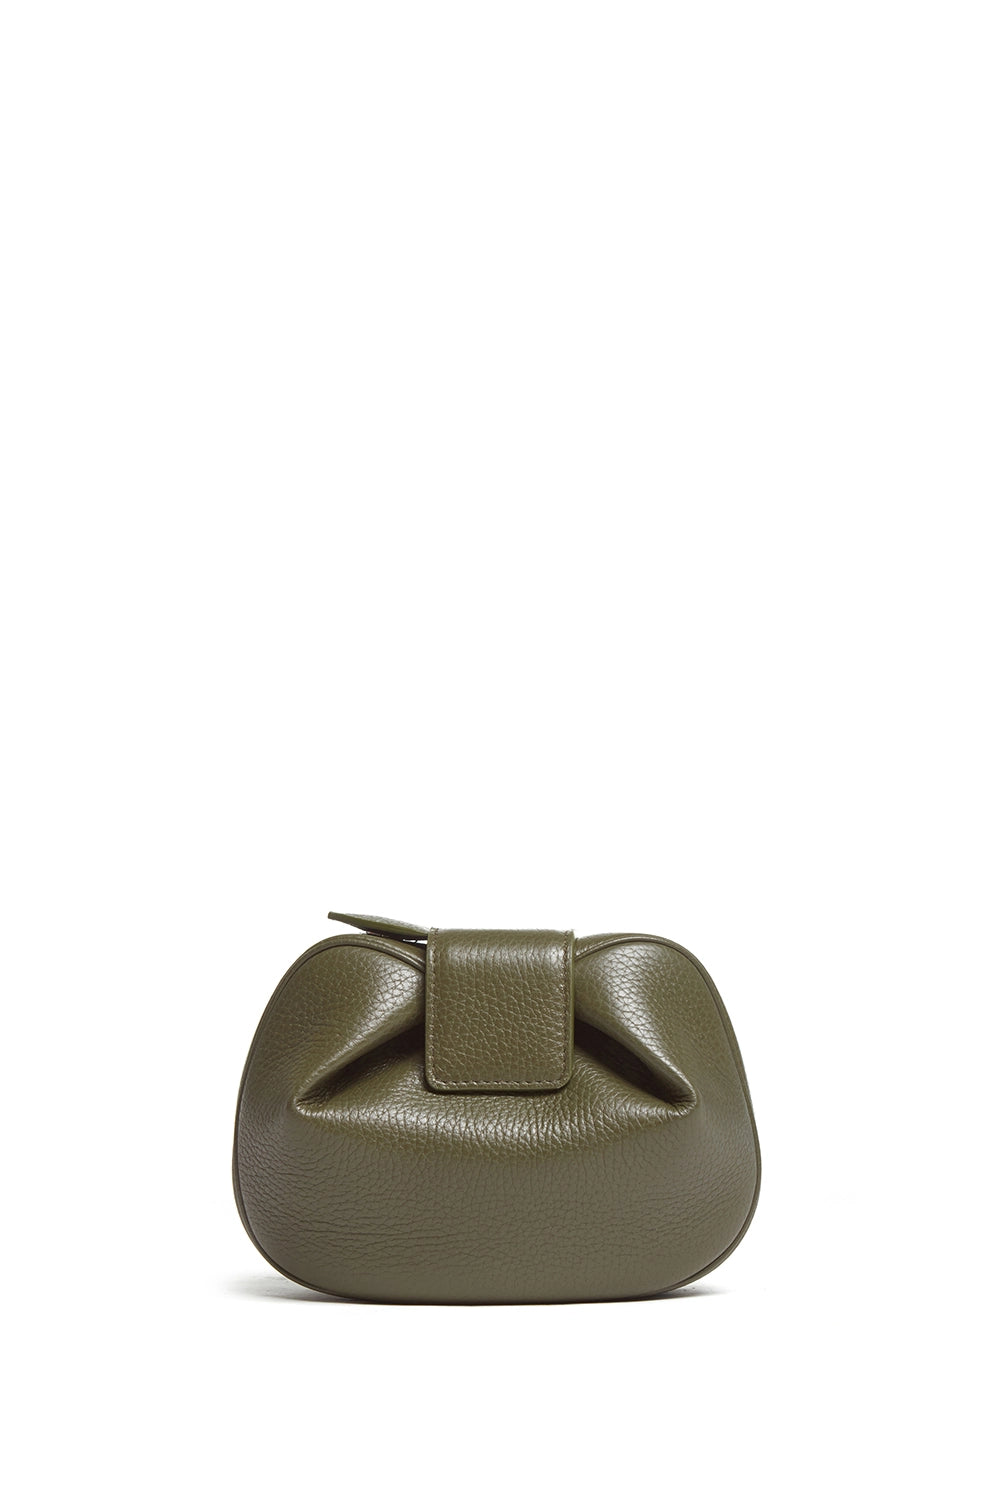 Dark GREEN cross body / shoulder bag. Genuine leather bag. Medium size –  Handmade suede bags by Good Times Barcelona